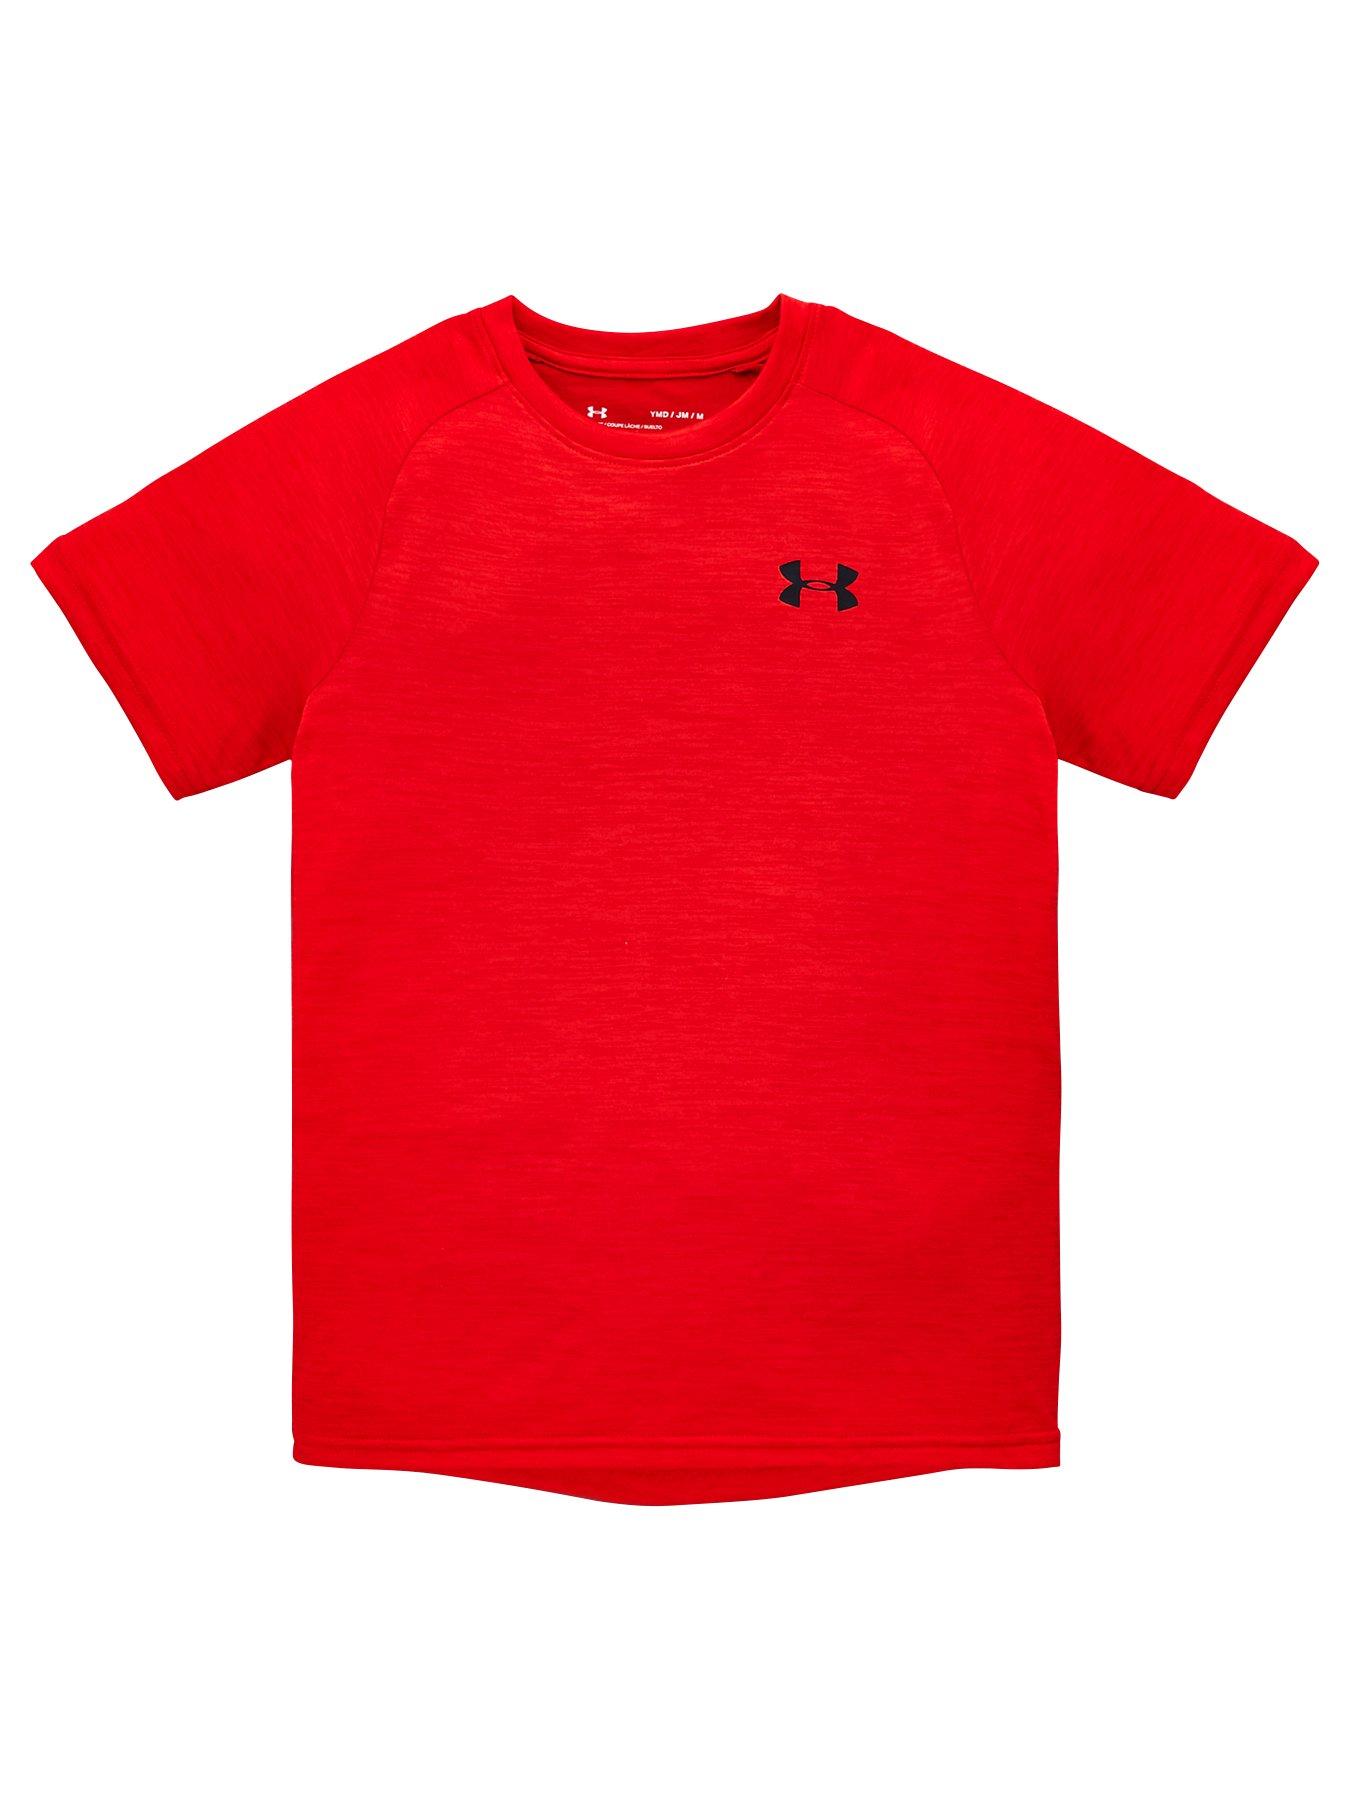 Details about   Under Armour Youth Boy's UA Tech Big Logo Hybrid T-Shirt 